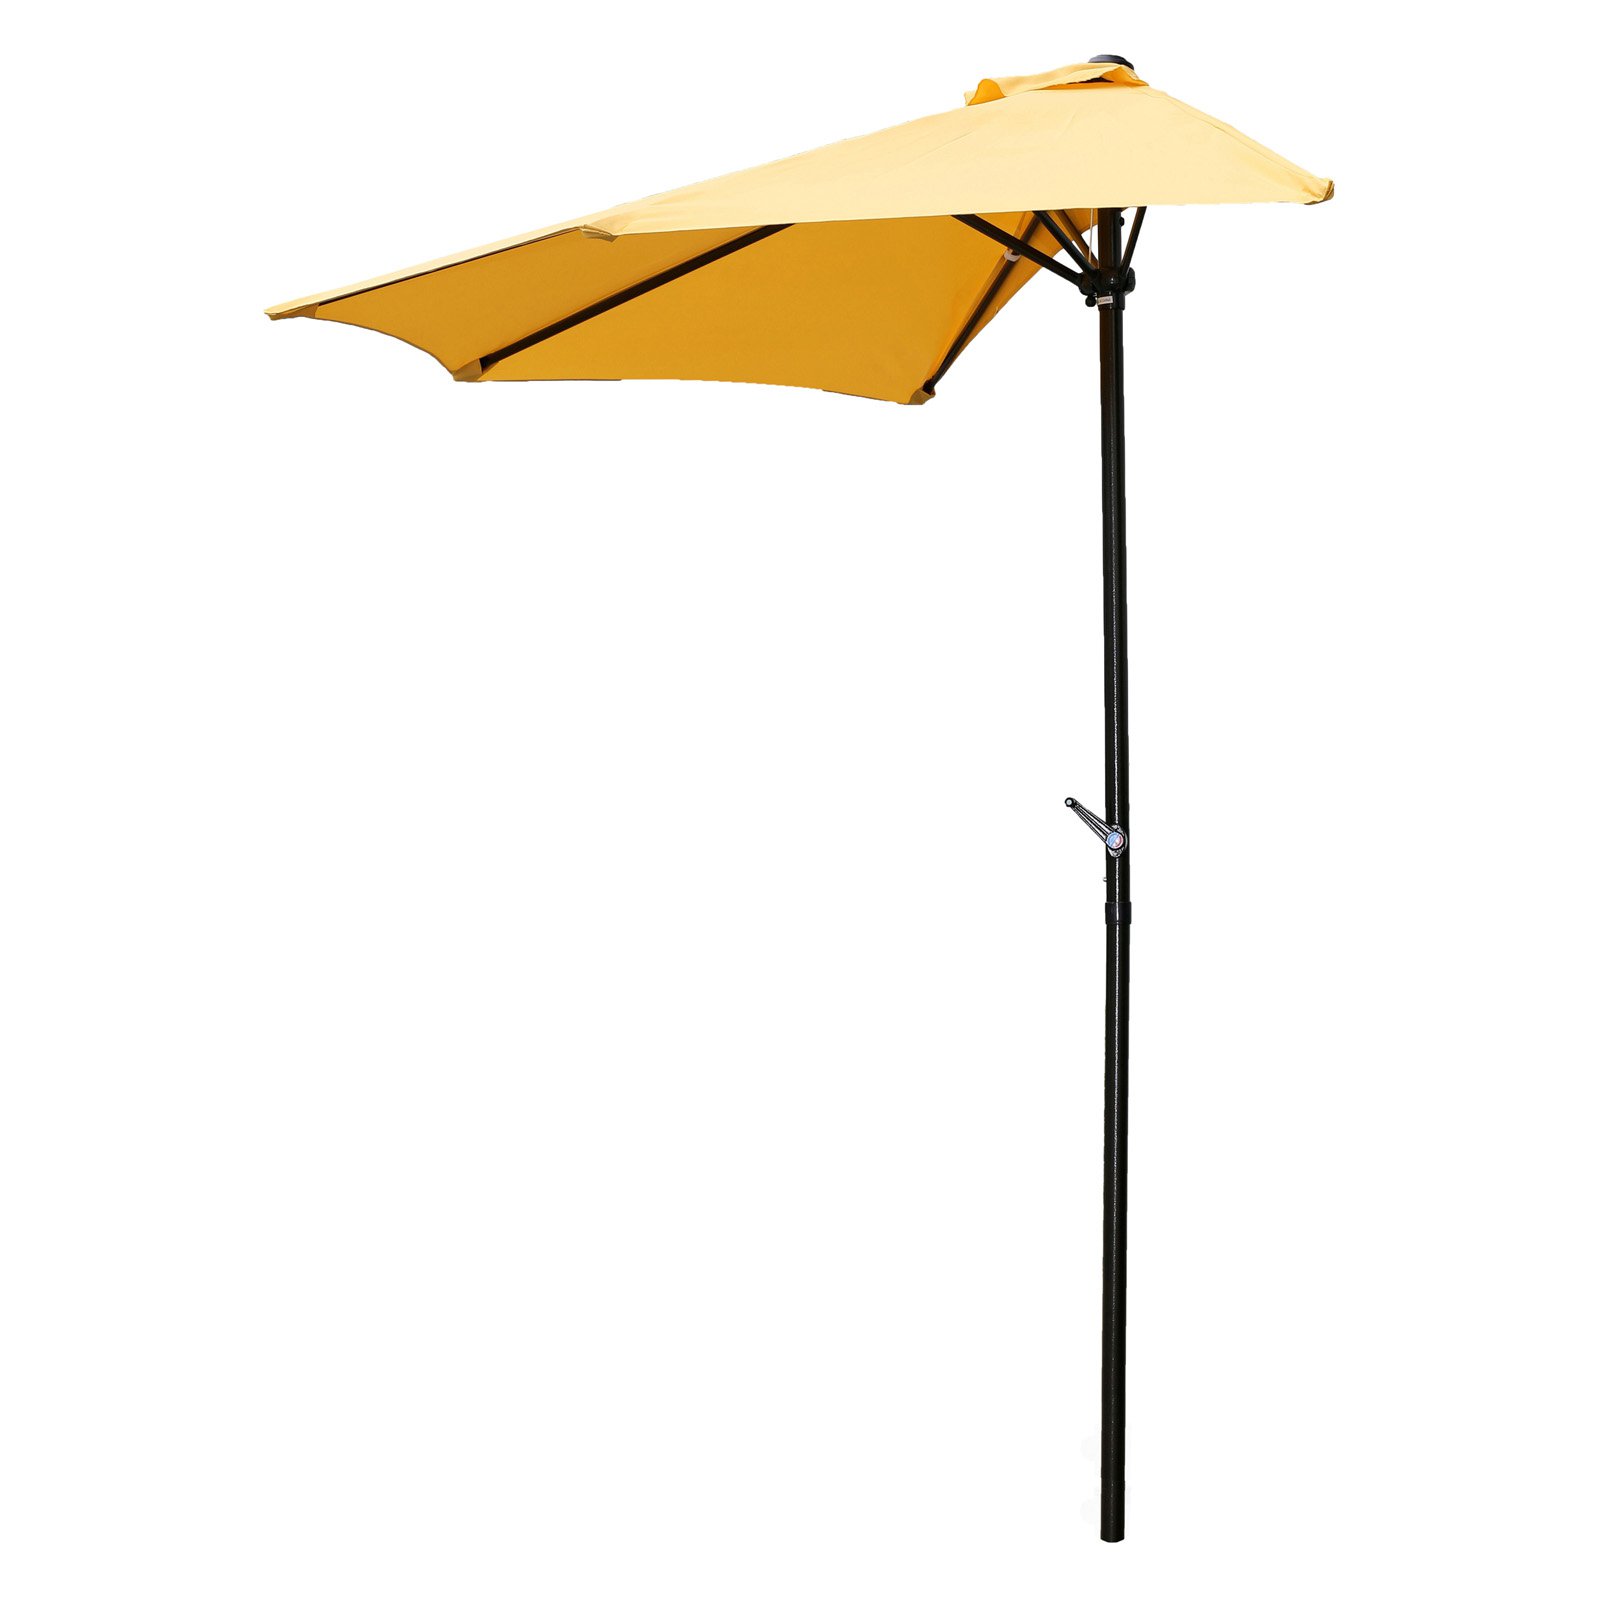 International Caravan St. Kitts 9' Half Patio Umbrella in Lemon Yellow - image 1 of 2